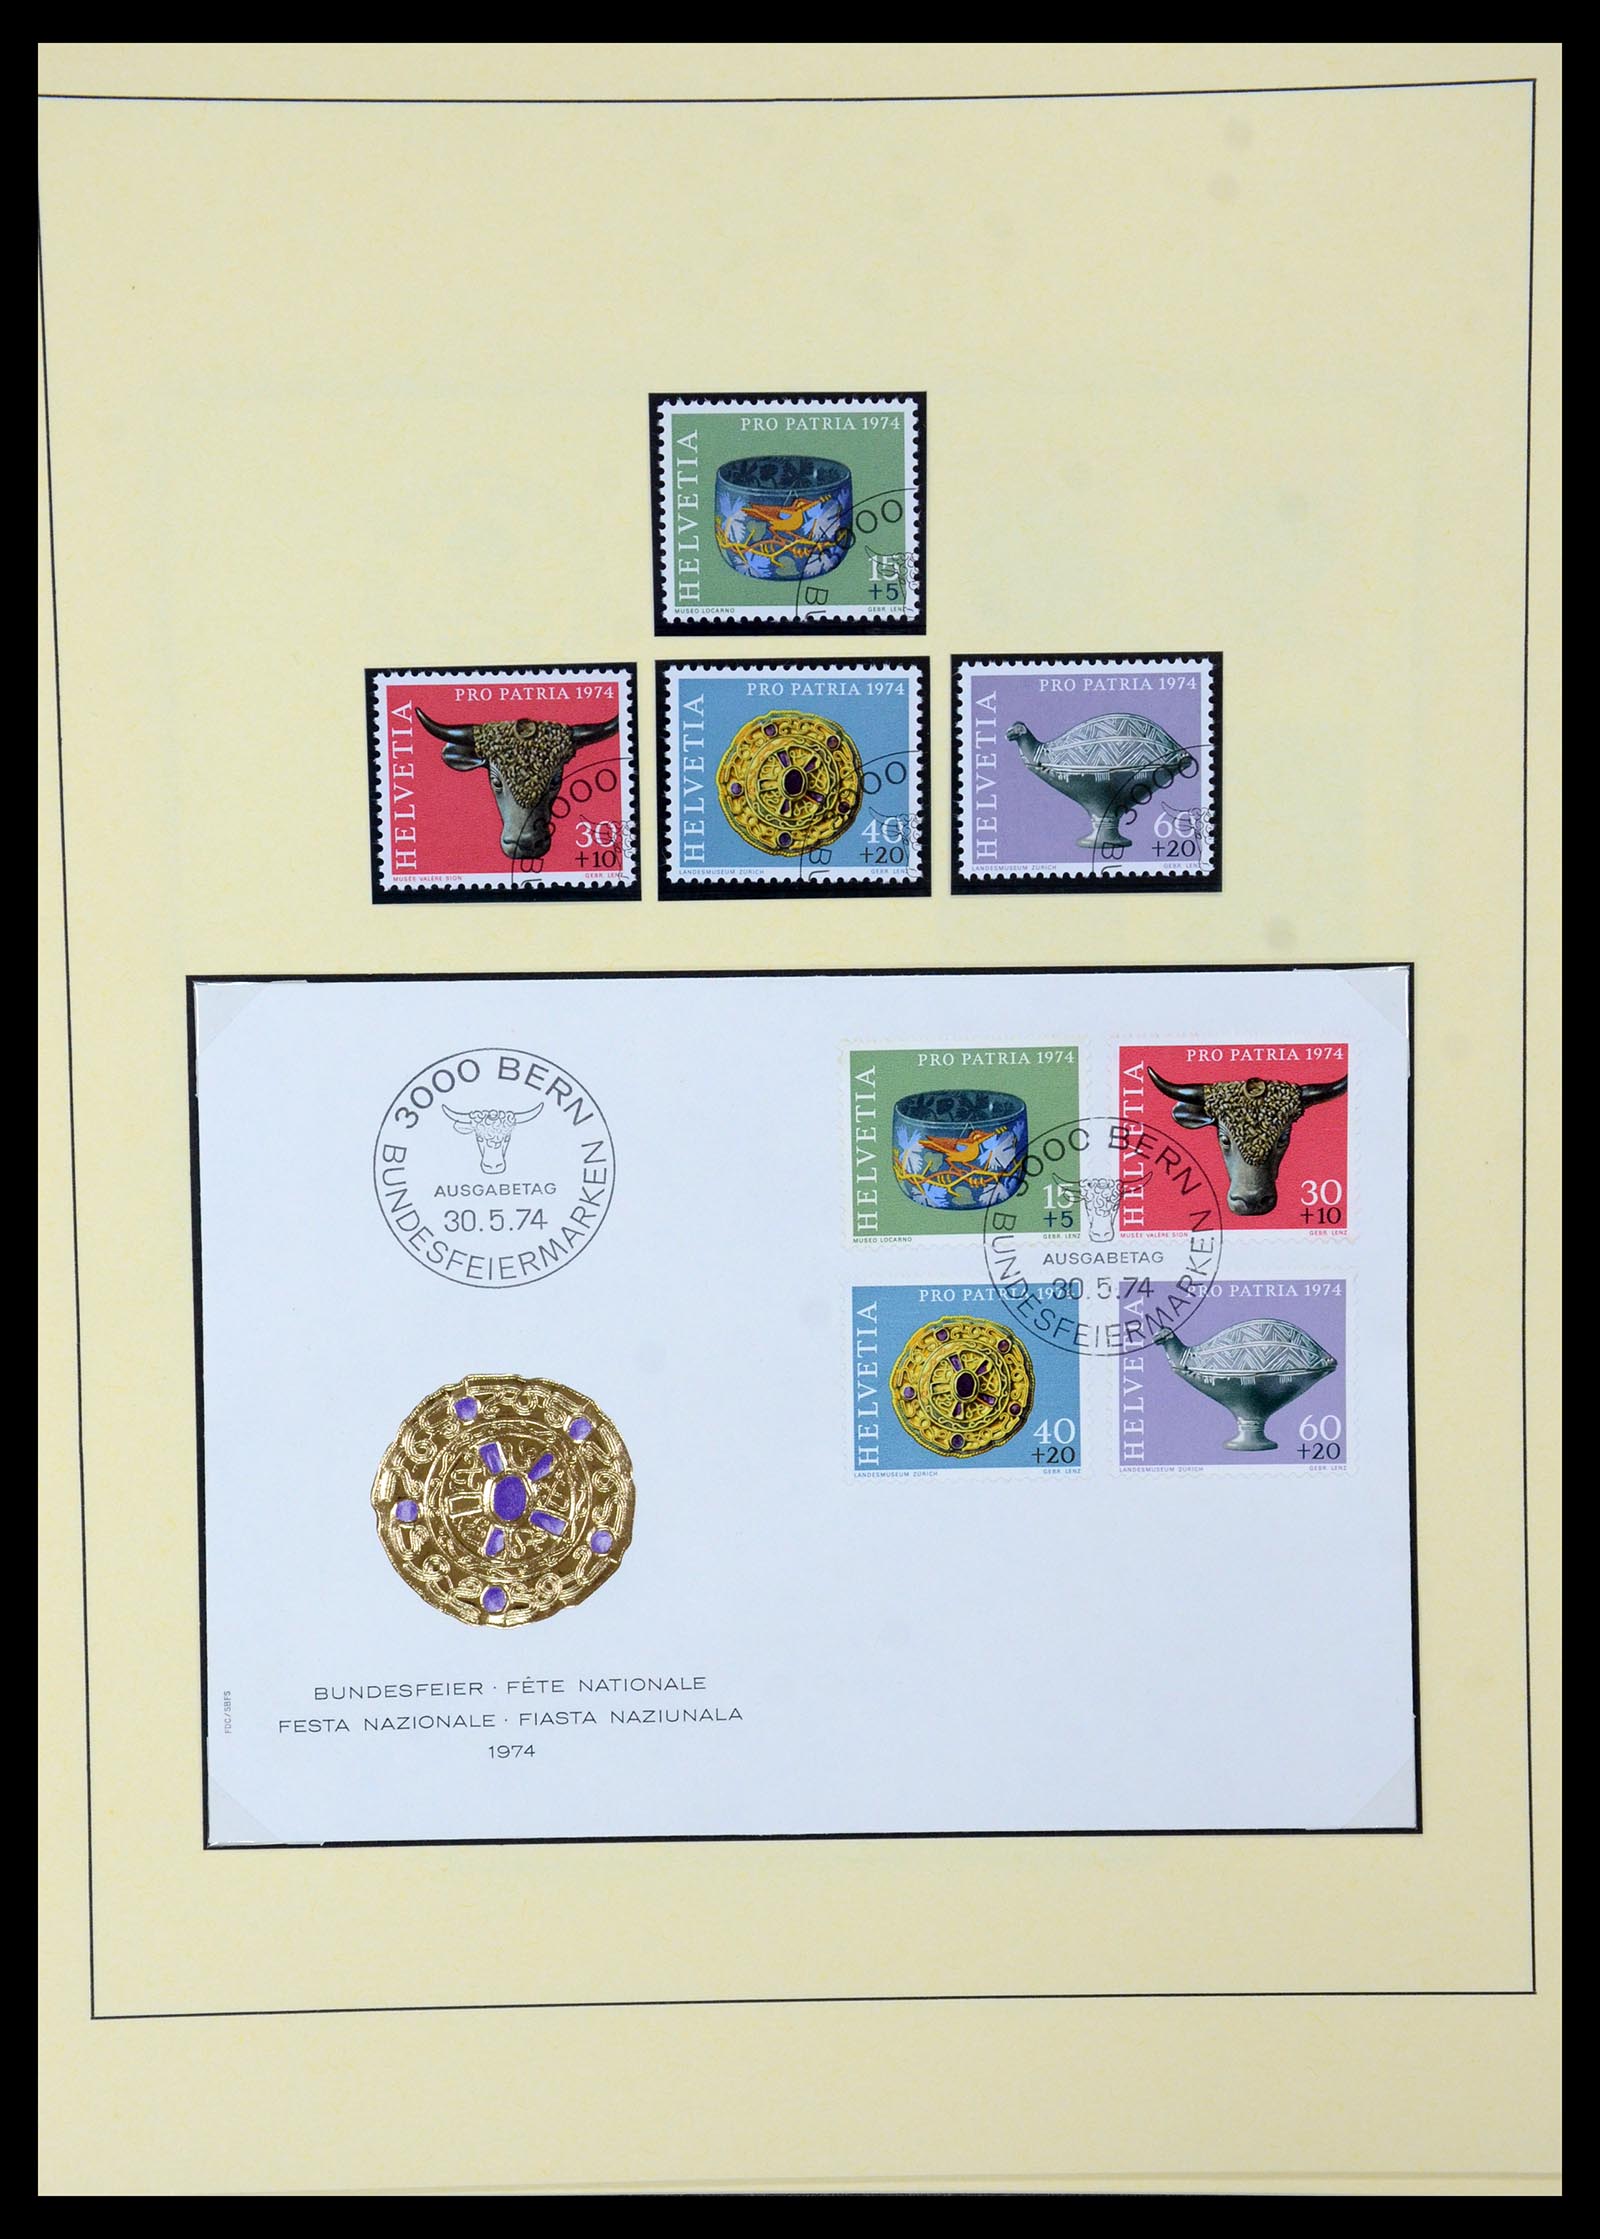 35668 062 - Stamp Collection 35668 Switzerland Pro Juventute and Pro Patria 1910-197